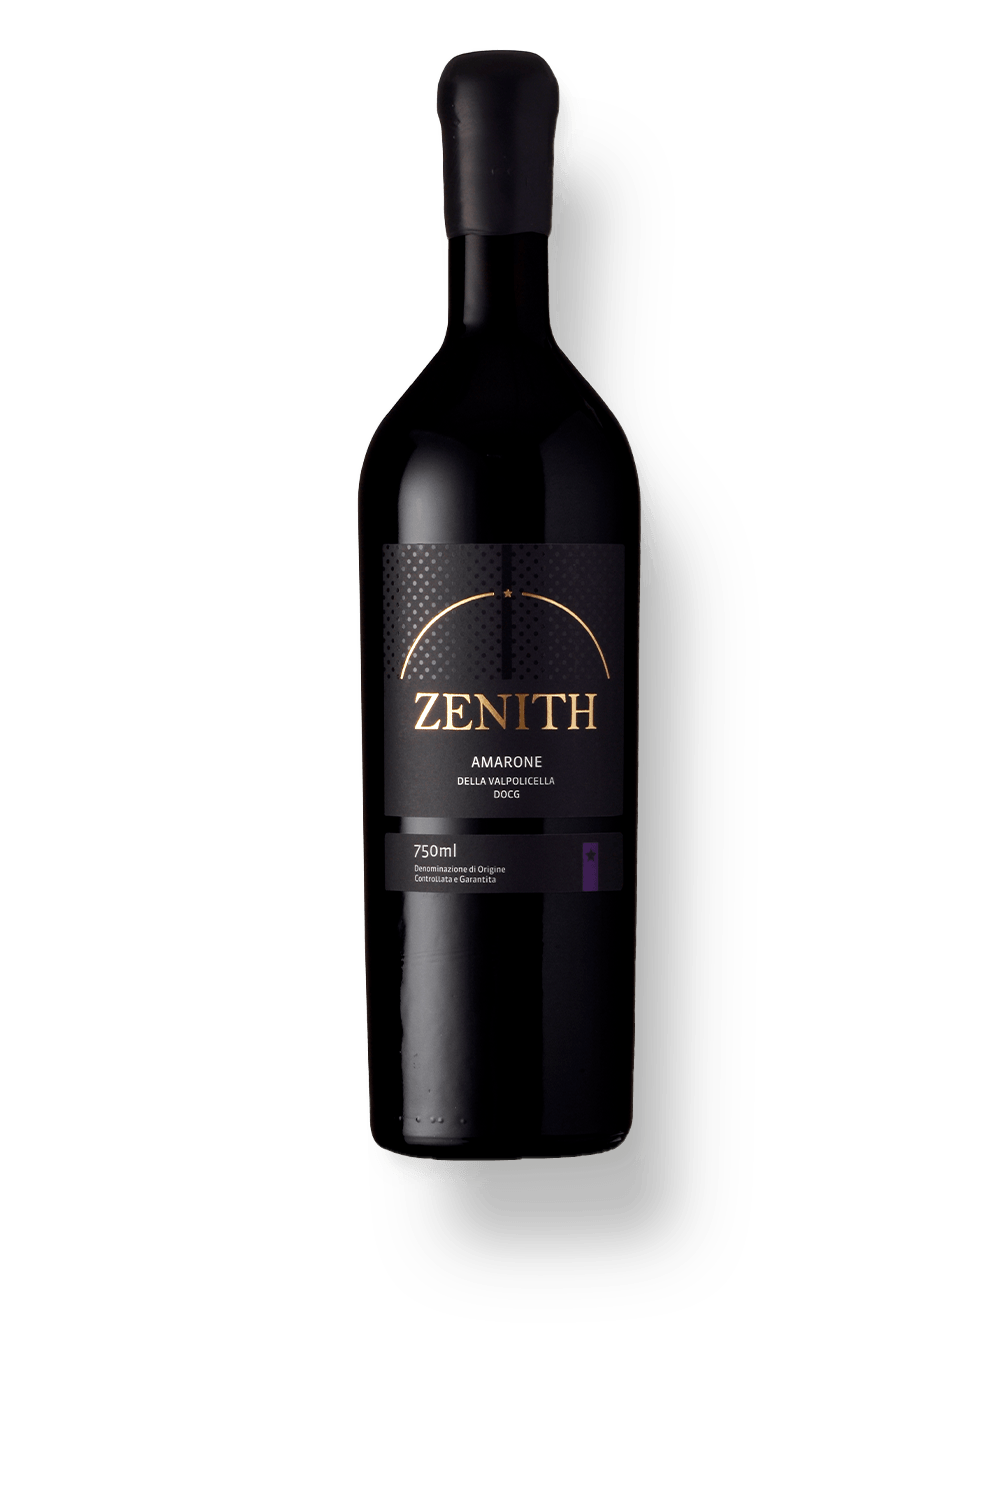 025123-Zenith-Amarone-Valpolicella-DOCG-2015